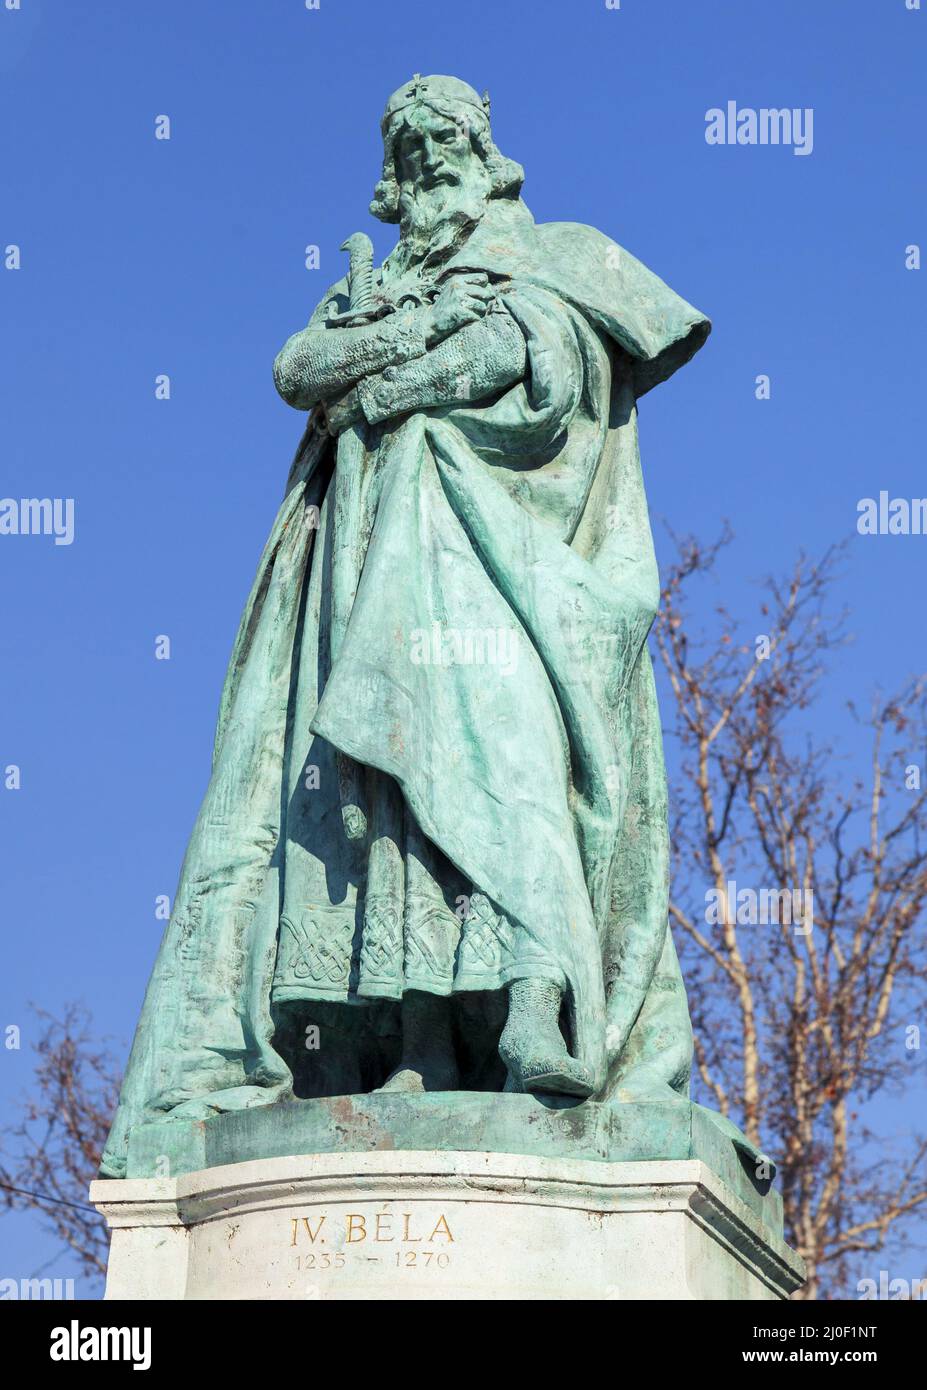 Budapest, HUNGRÍA - 15 DE FEBRERO de 2015 - Estatua del rey Bela IV en la Plaza del Héroe, Budapest Foto de stock